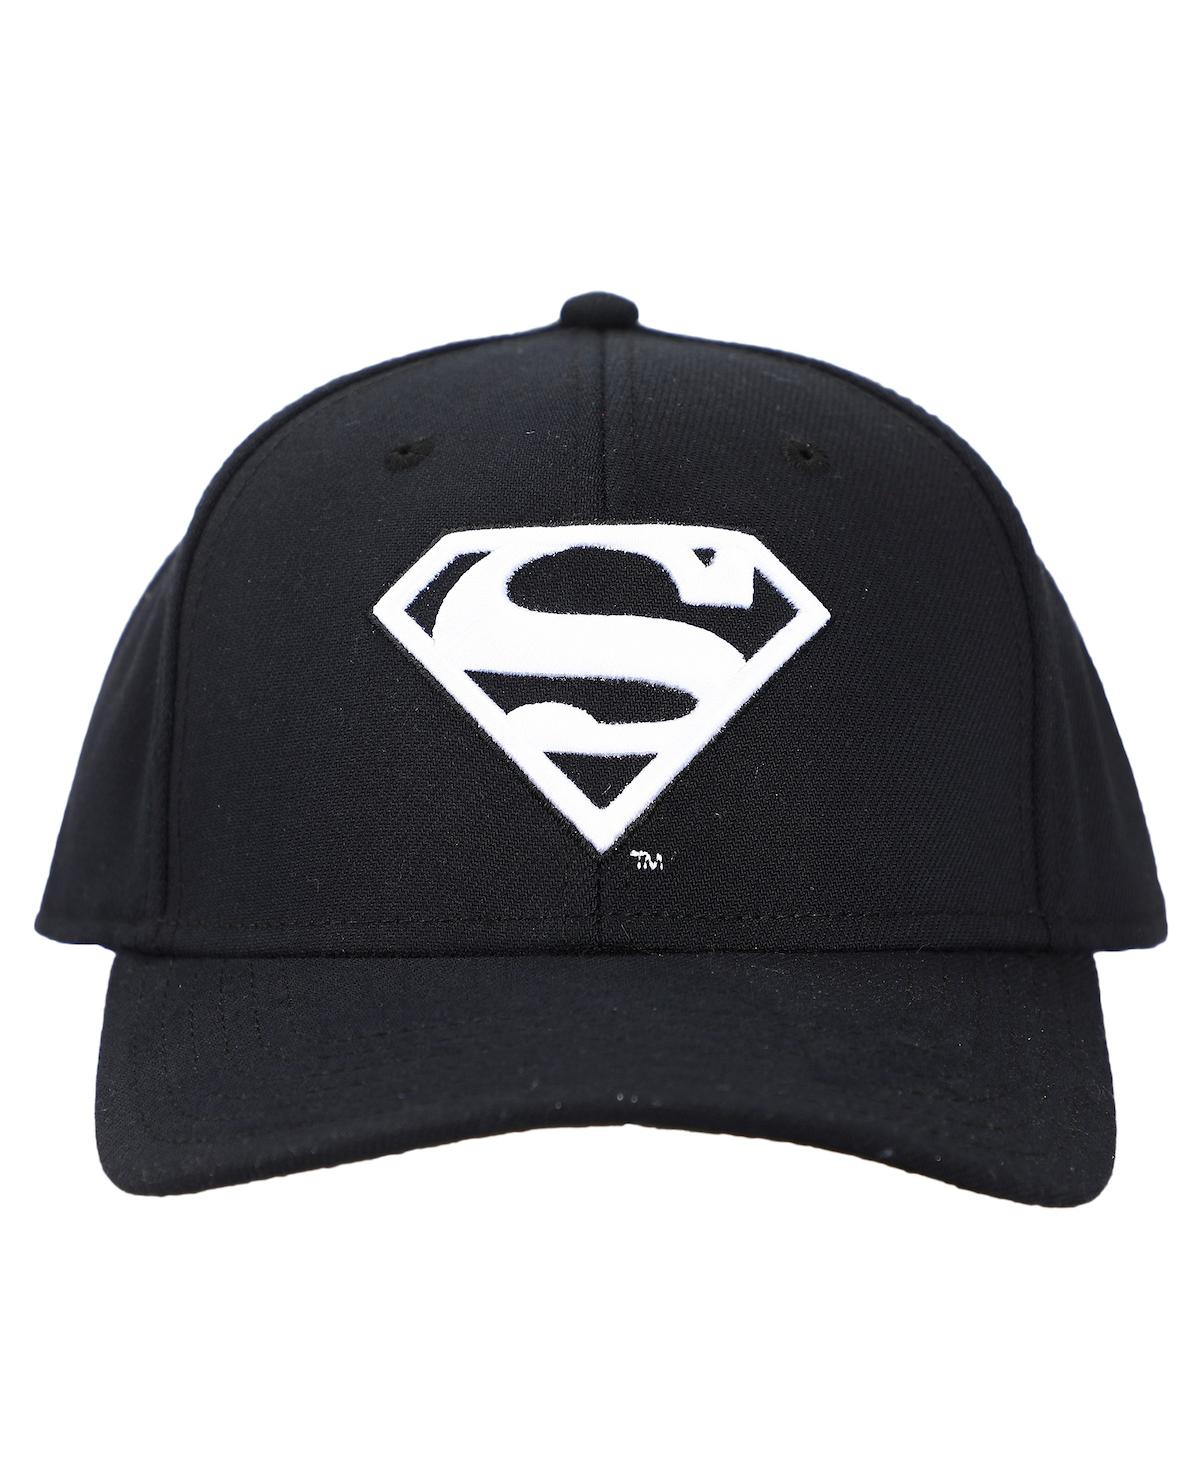 Men's Superman White Logo Black Snapback Hat - Black